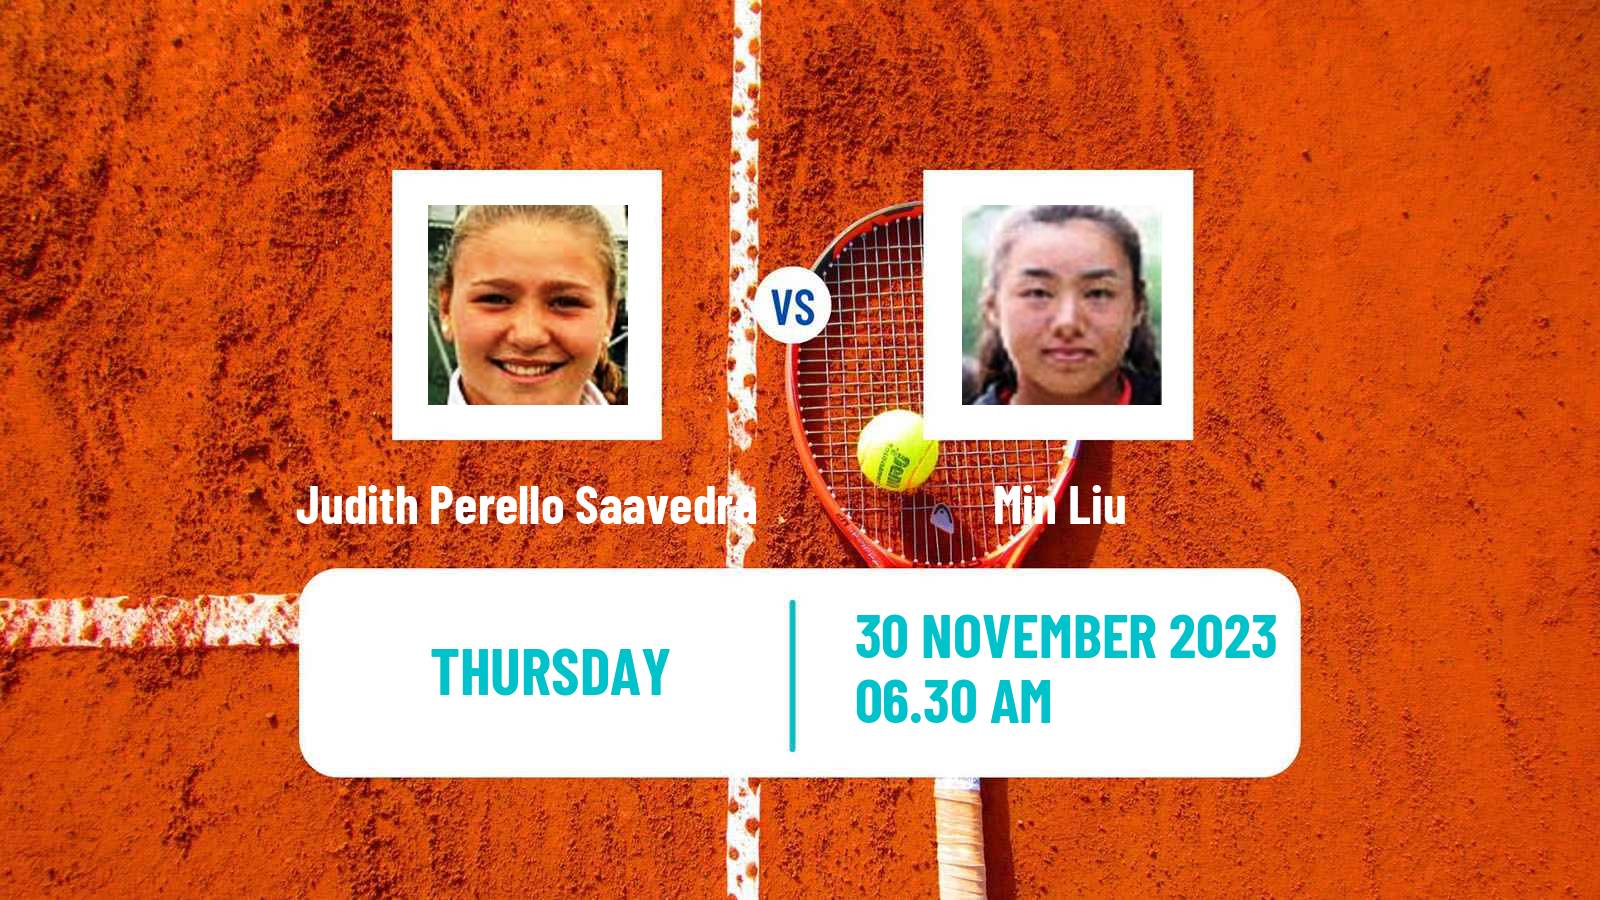 Tennis ITF W15 Valencia Women Judith Perello Saavedra - Min Liu